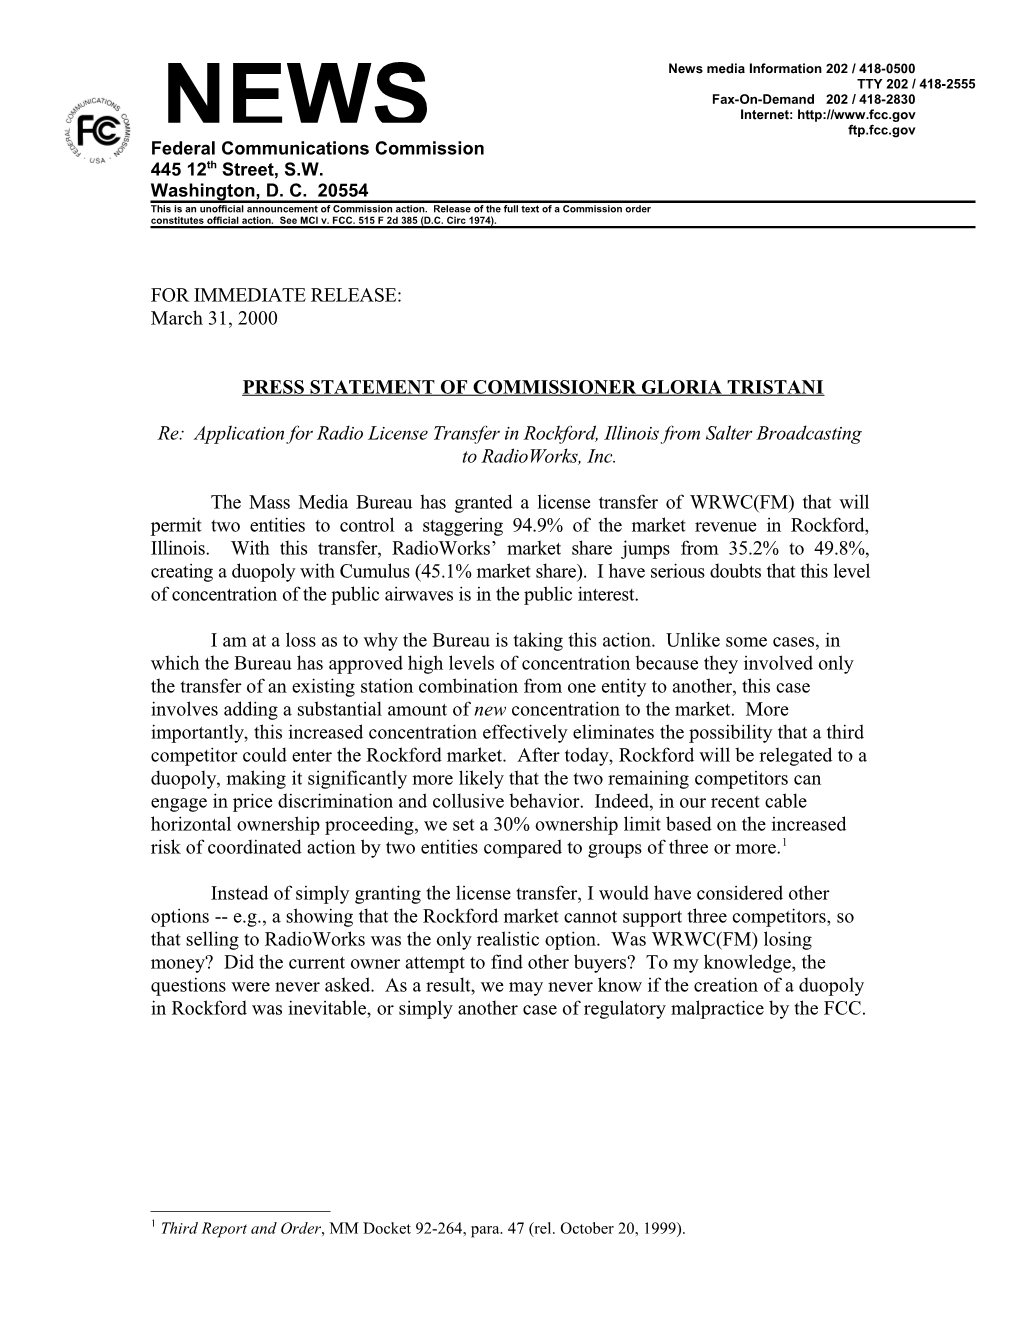 Press Statement of Commissioner Gloria Tristani